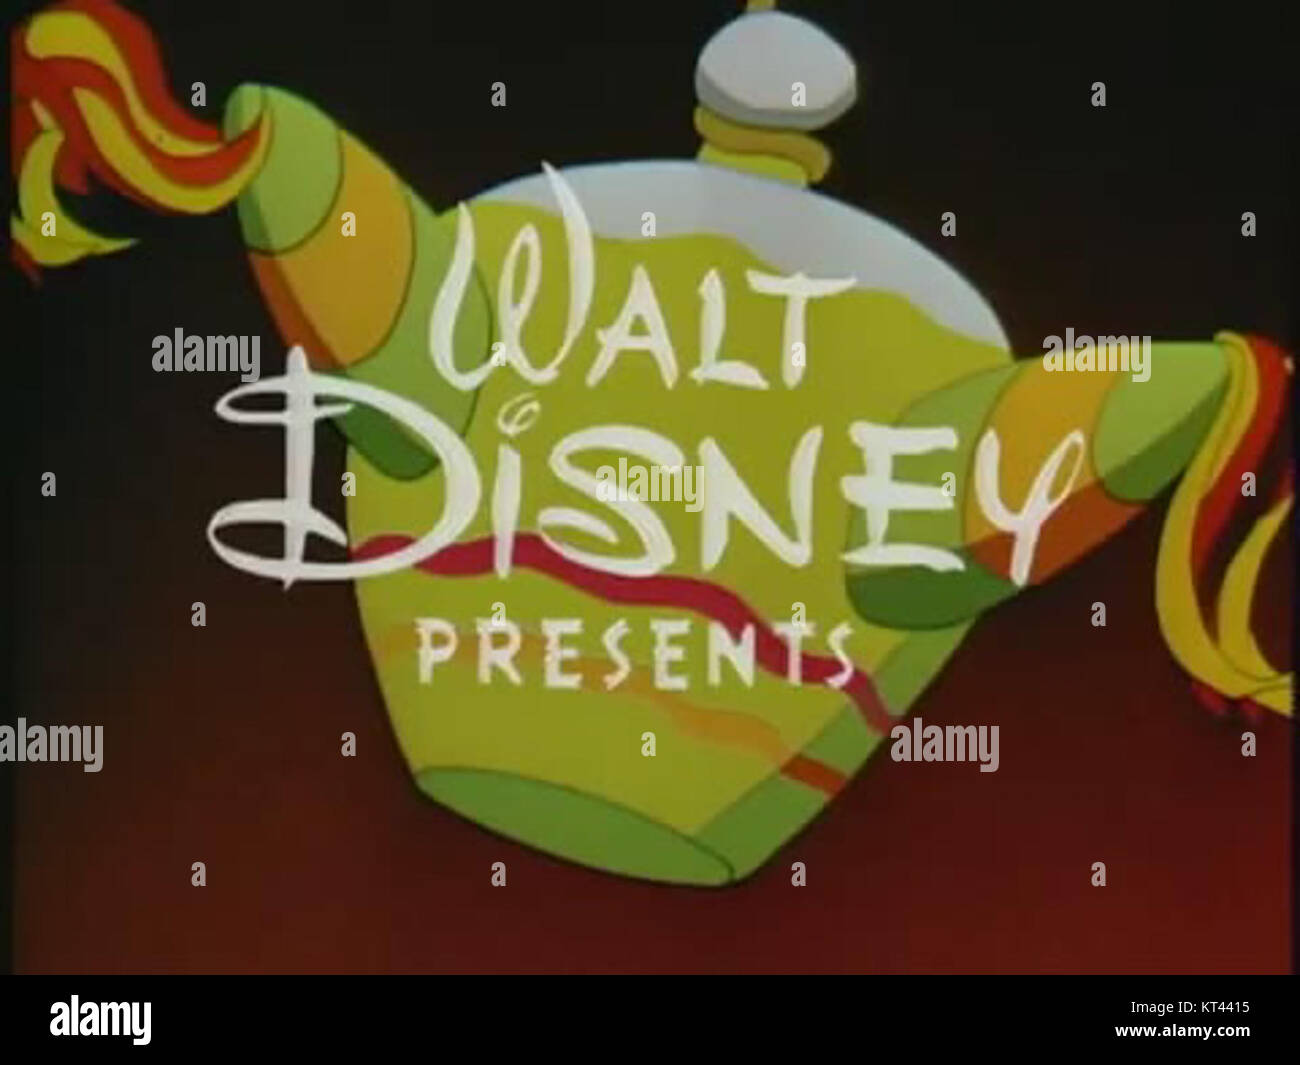 Los tres Caballeros 3 - Walt Disney Presents Stock Photo